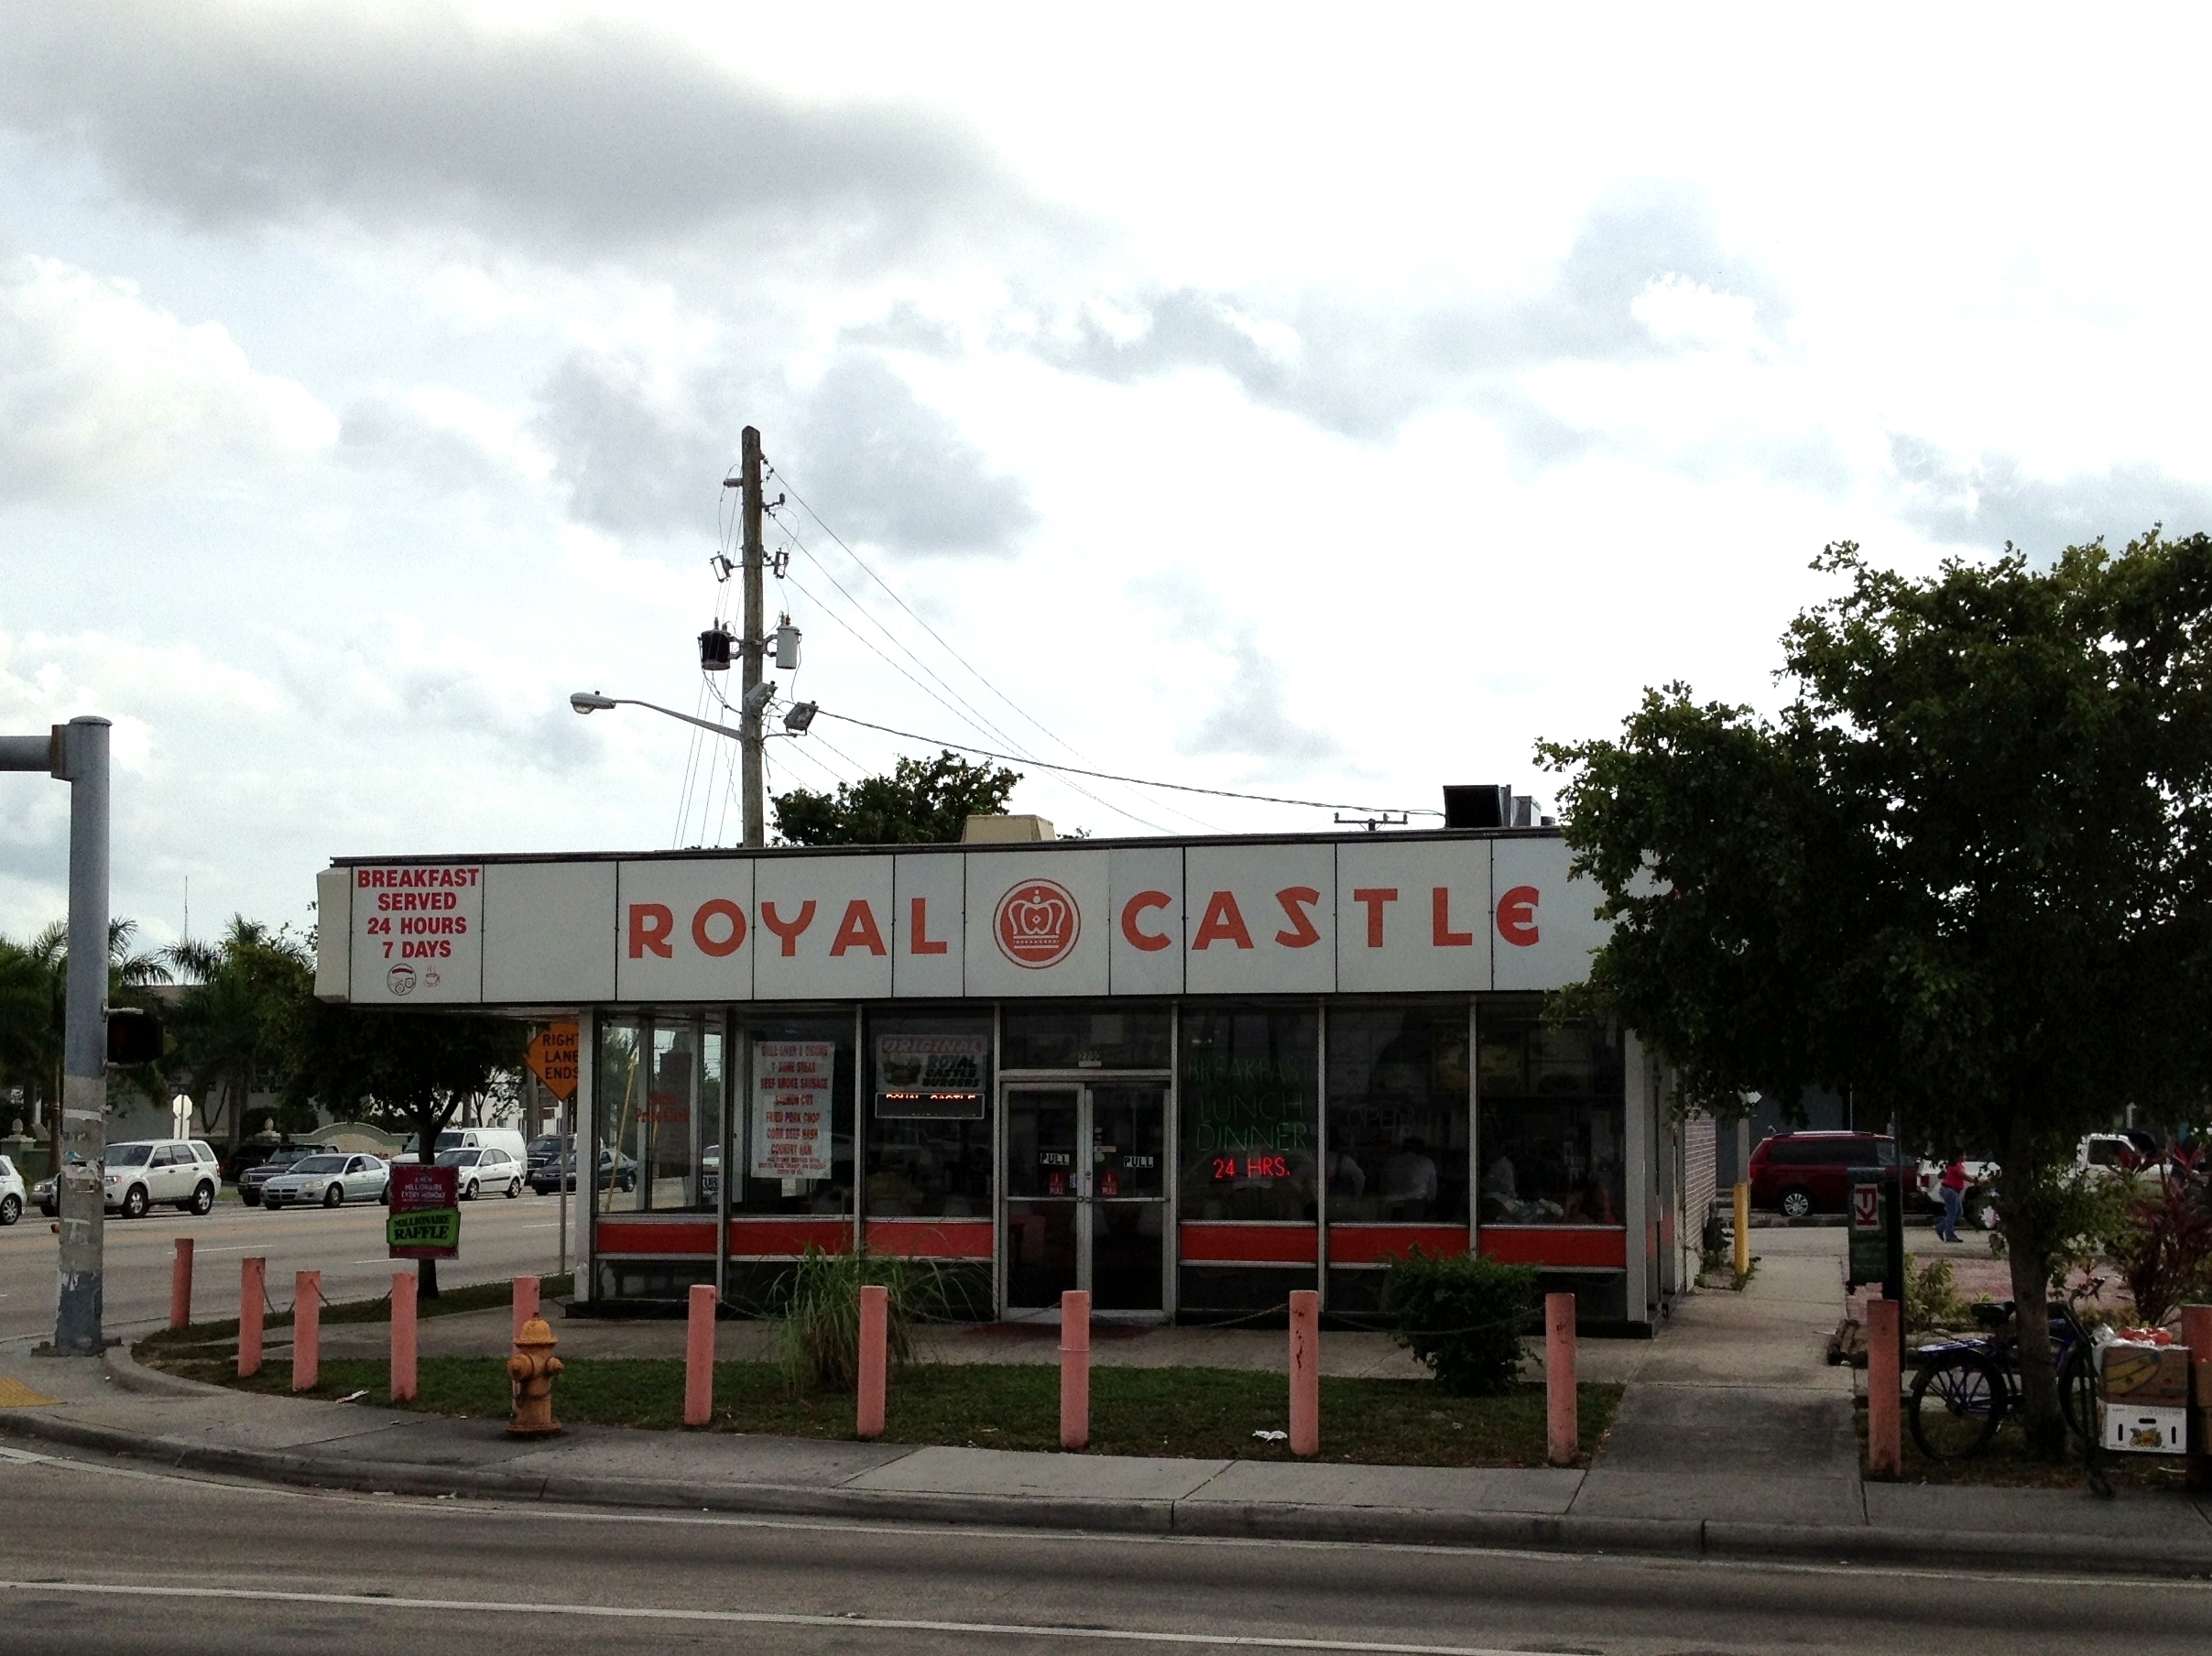 Royal Castle (restaurant chain) - Wikipedia